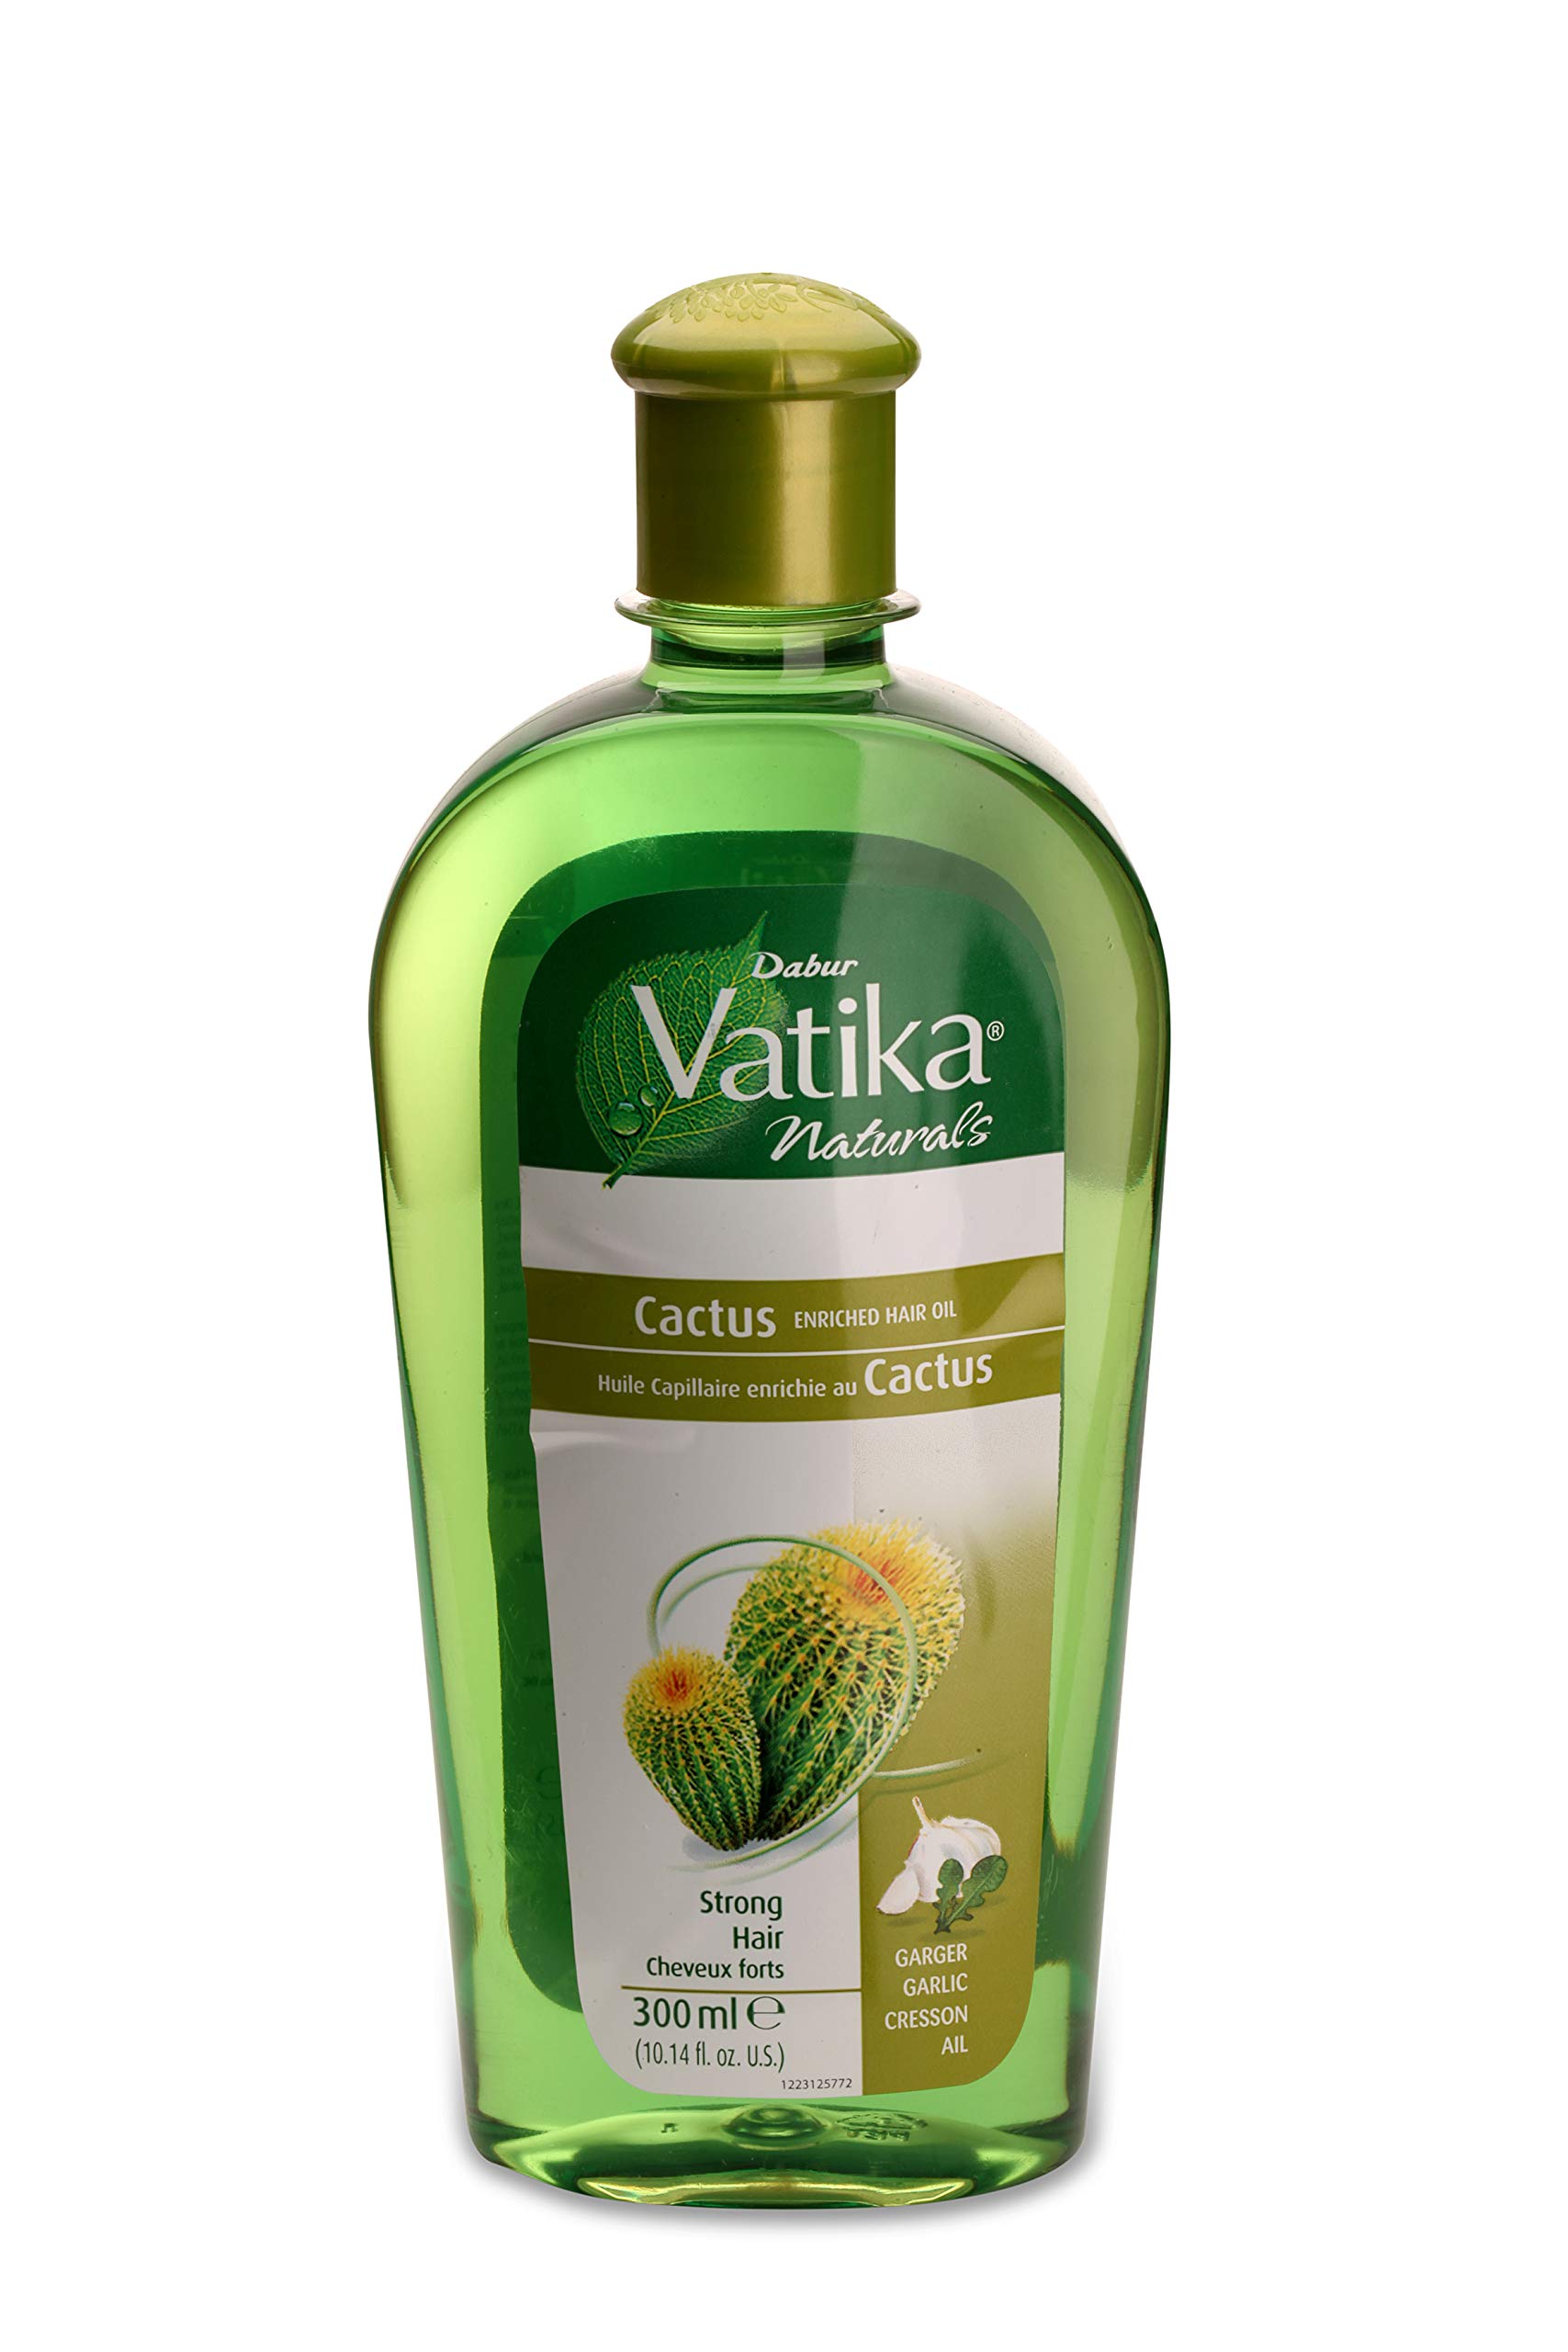 Vatika Naturals Cactus Enriched Hair Oil 300mL